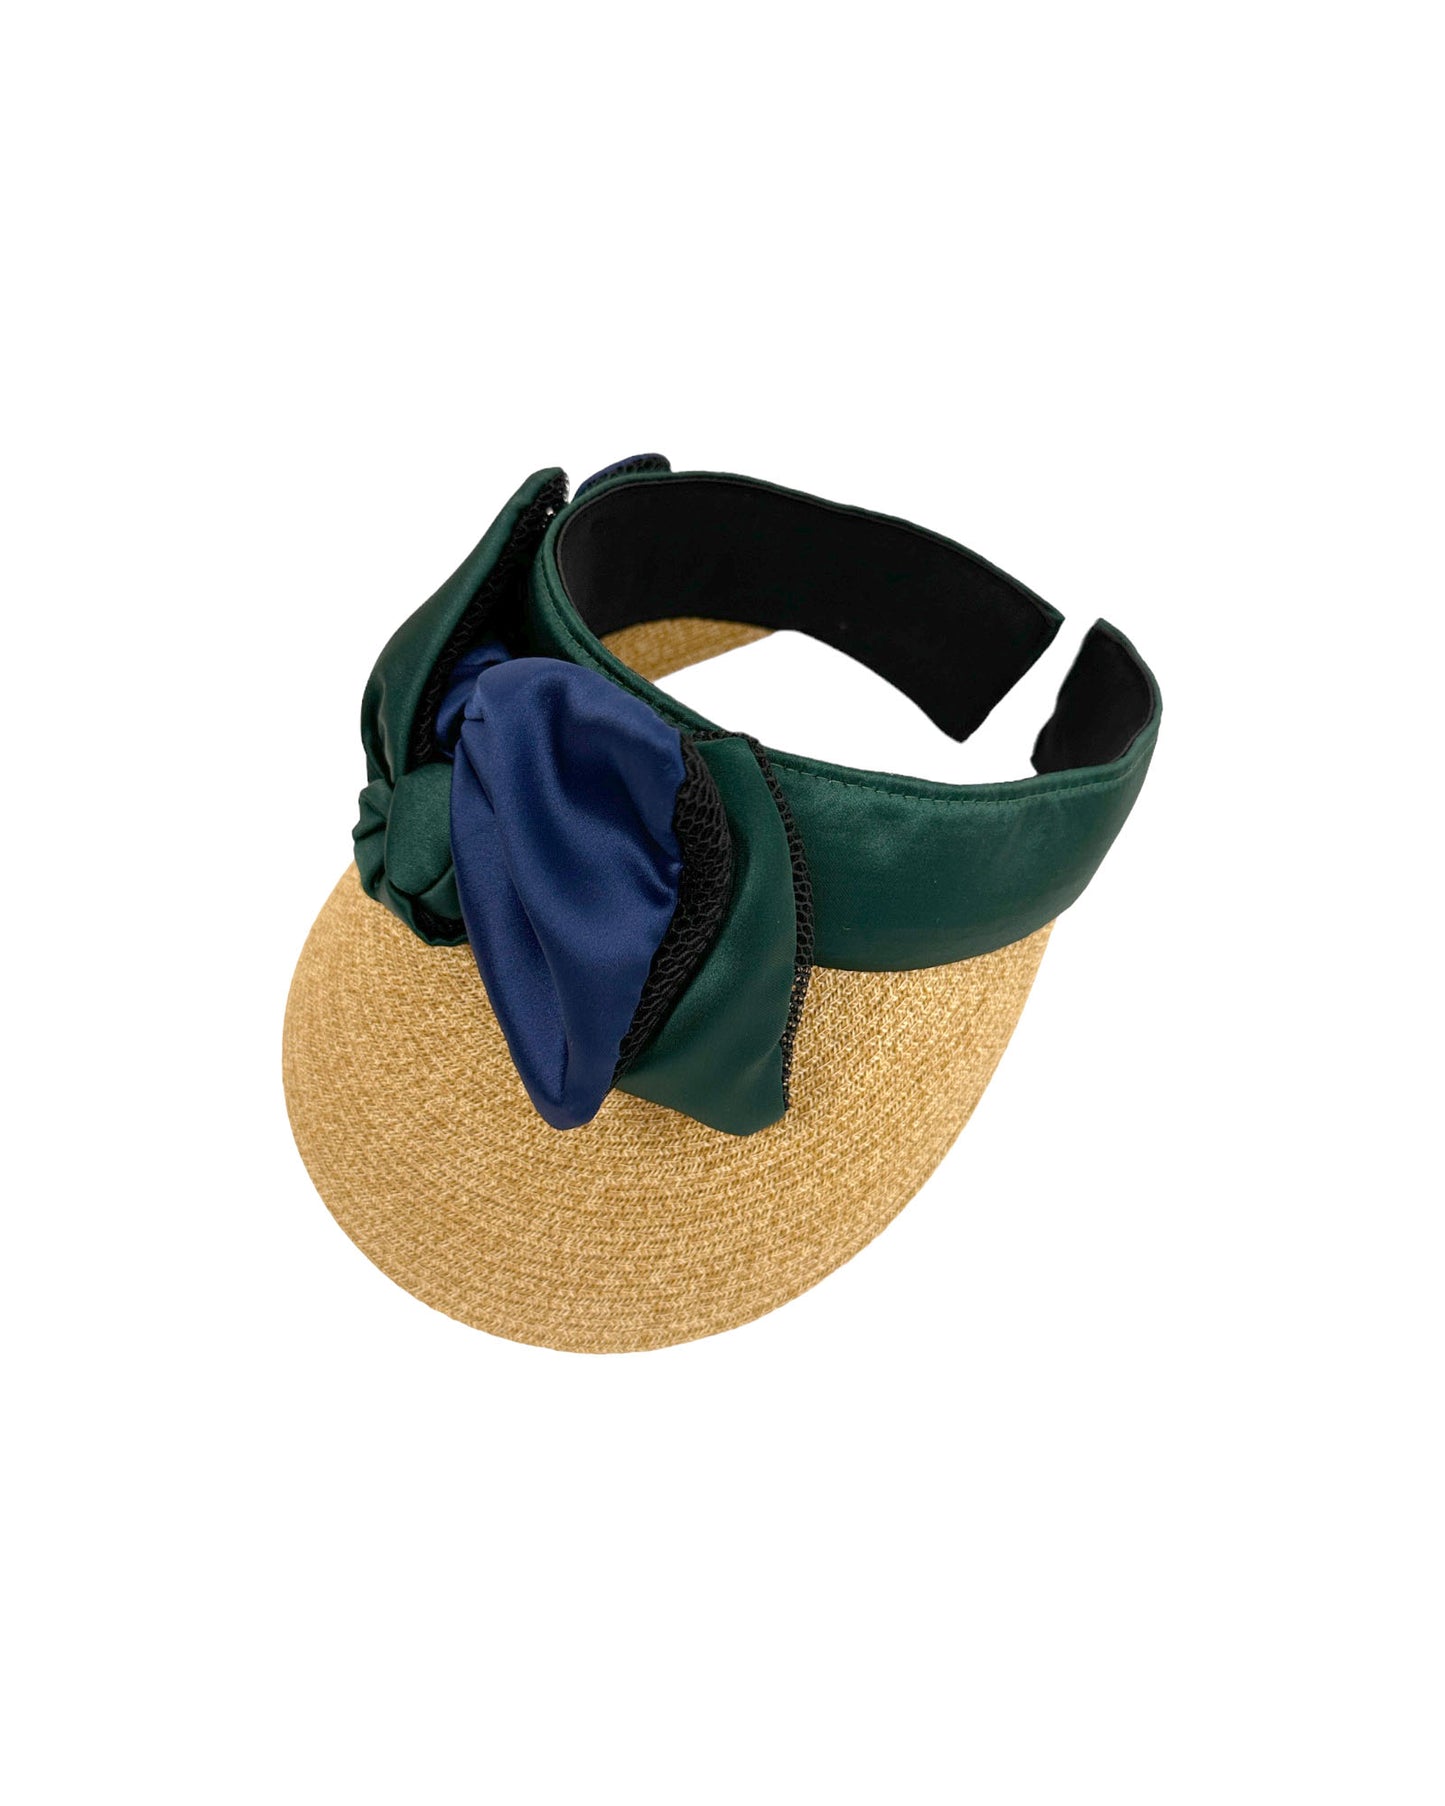 beige straw w/ navy green satin bow visor hat